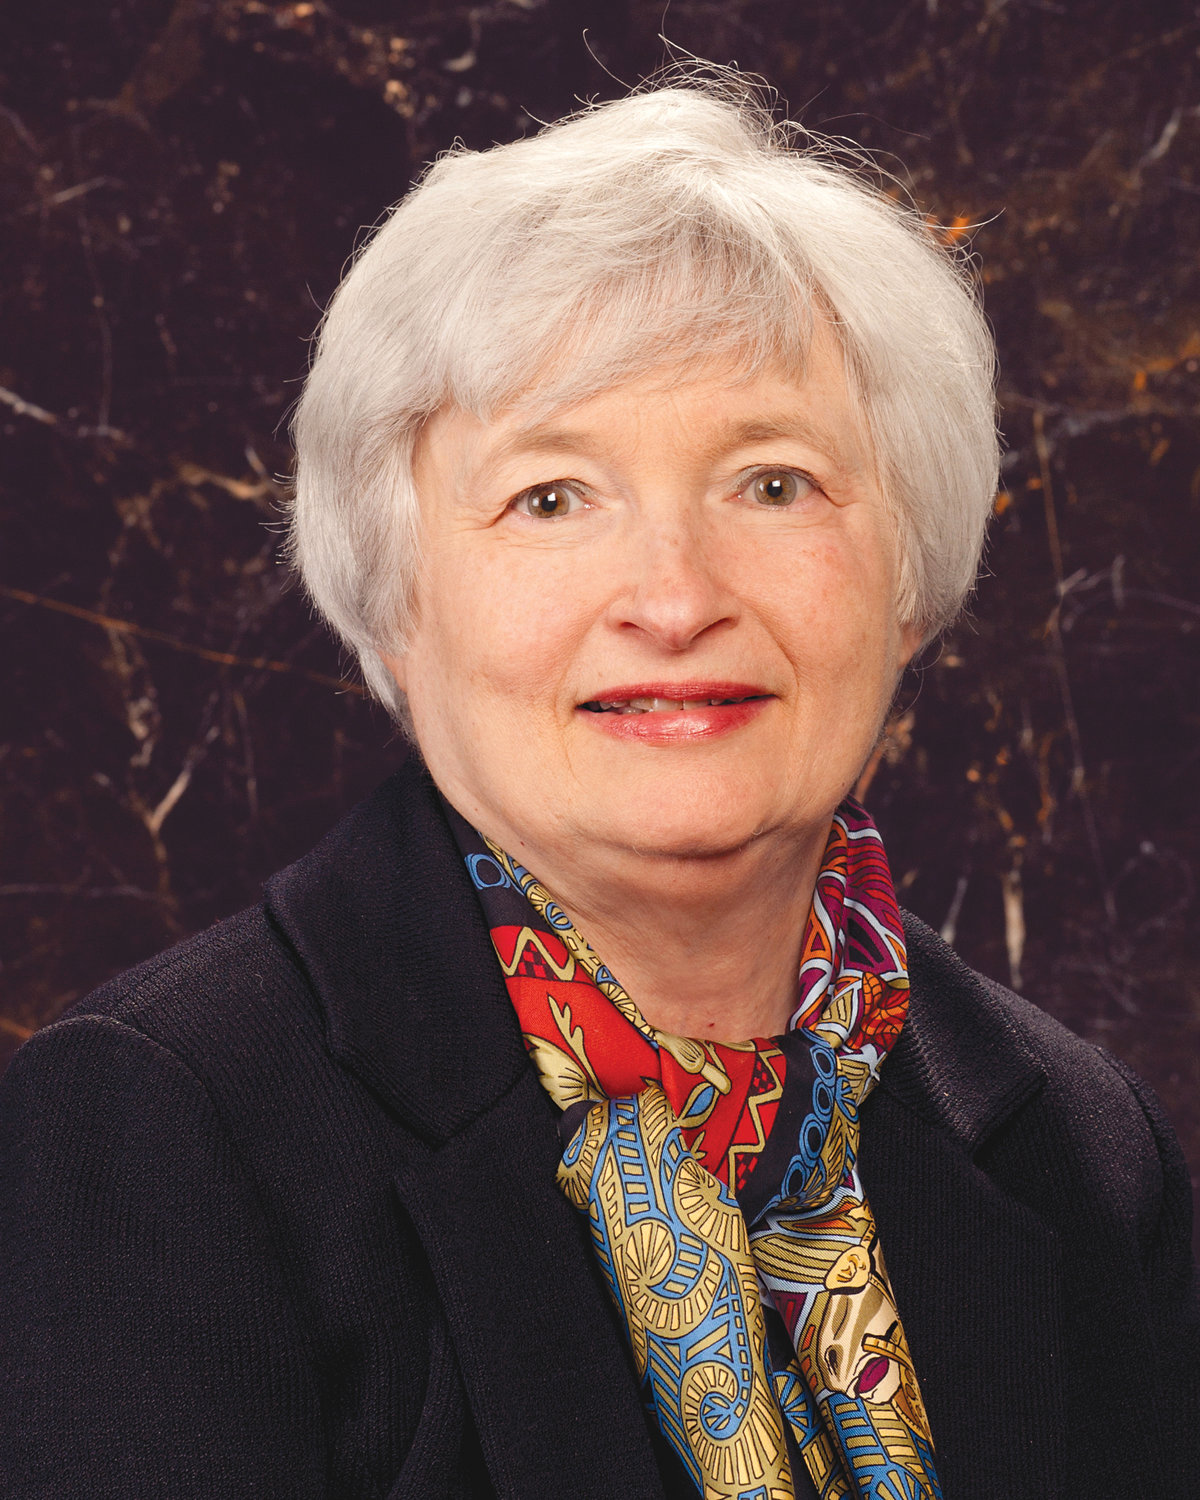 Janet Yellen, U.S. Treasury Secretary